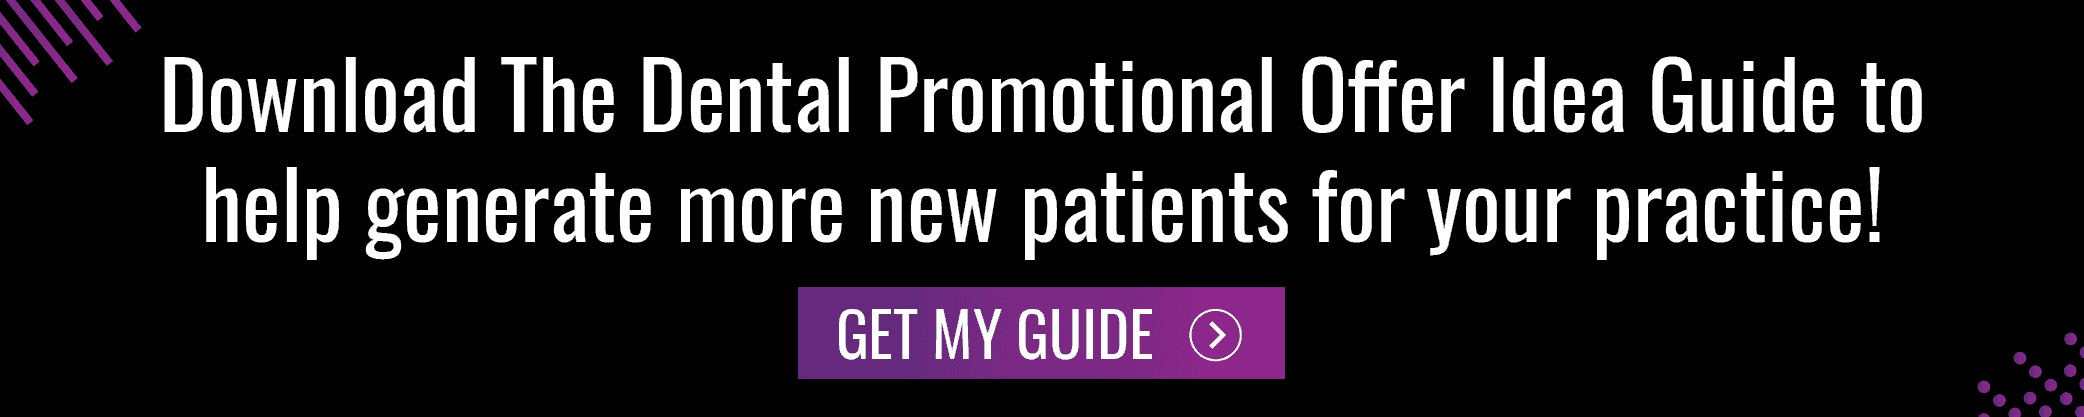 Dental Promotional Offer Idea Guide